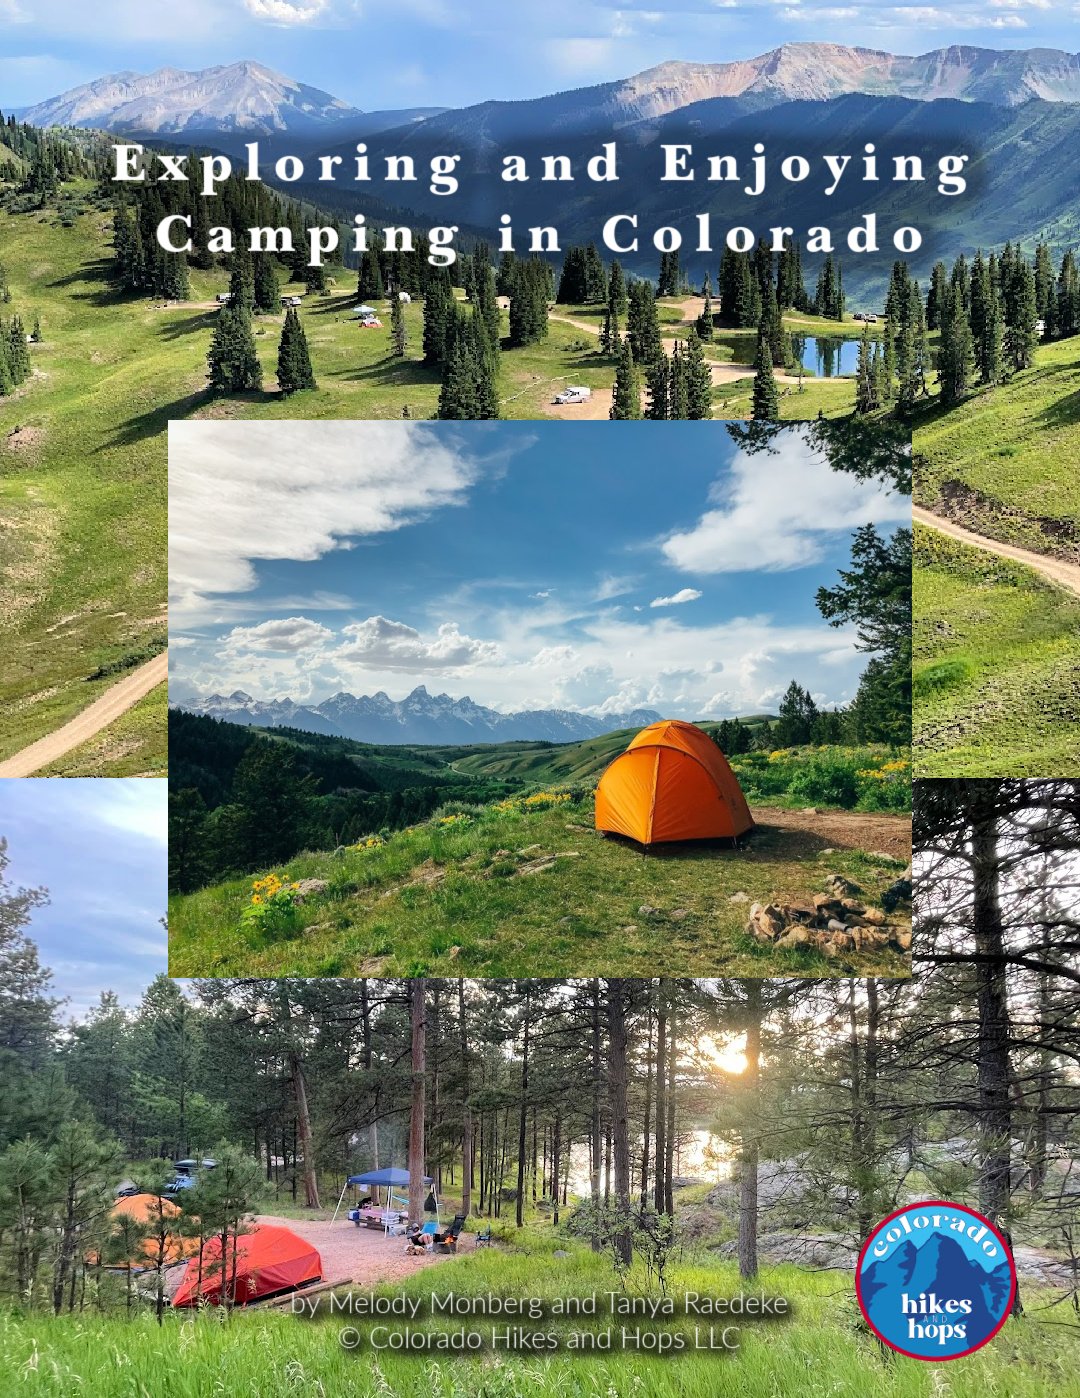 https://images.squarespace-cdn.com/content/v1/5f39599f0dd69335c3379b81/2369a0fd-4d4a-48dd-88af-2c736a37c4fb/Exploring+and+Enjoying+Camping+in+Colorado.jpg